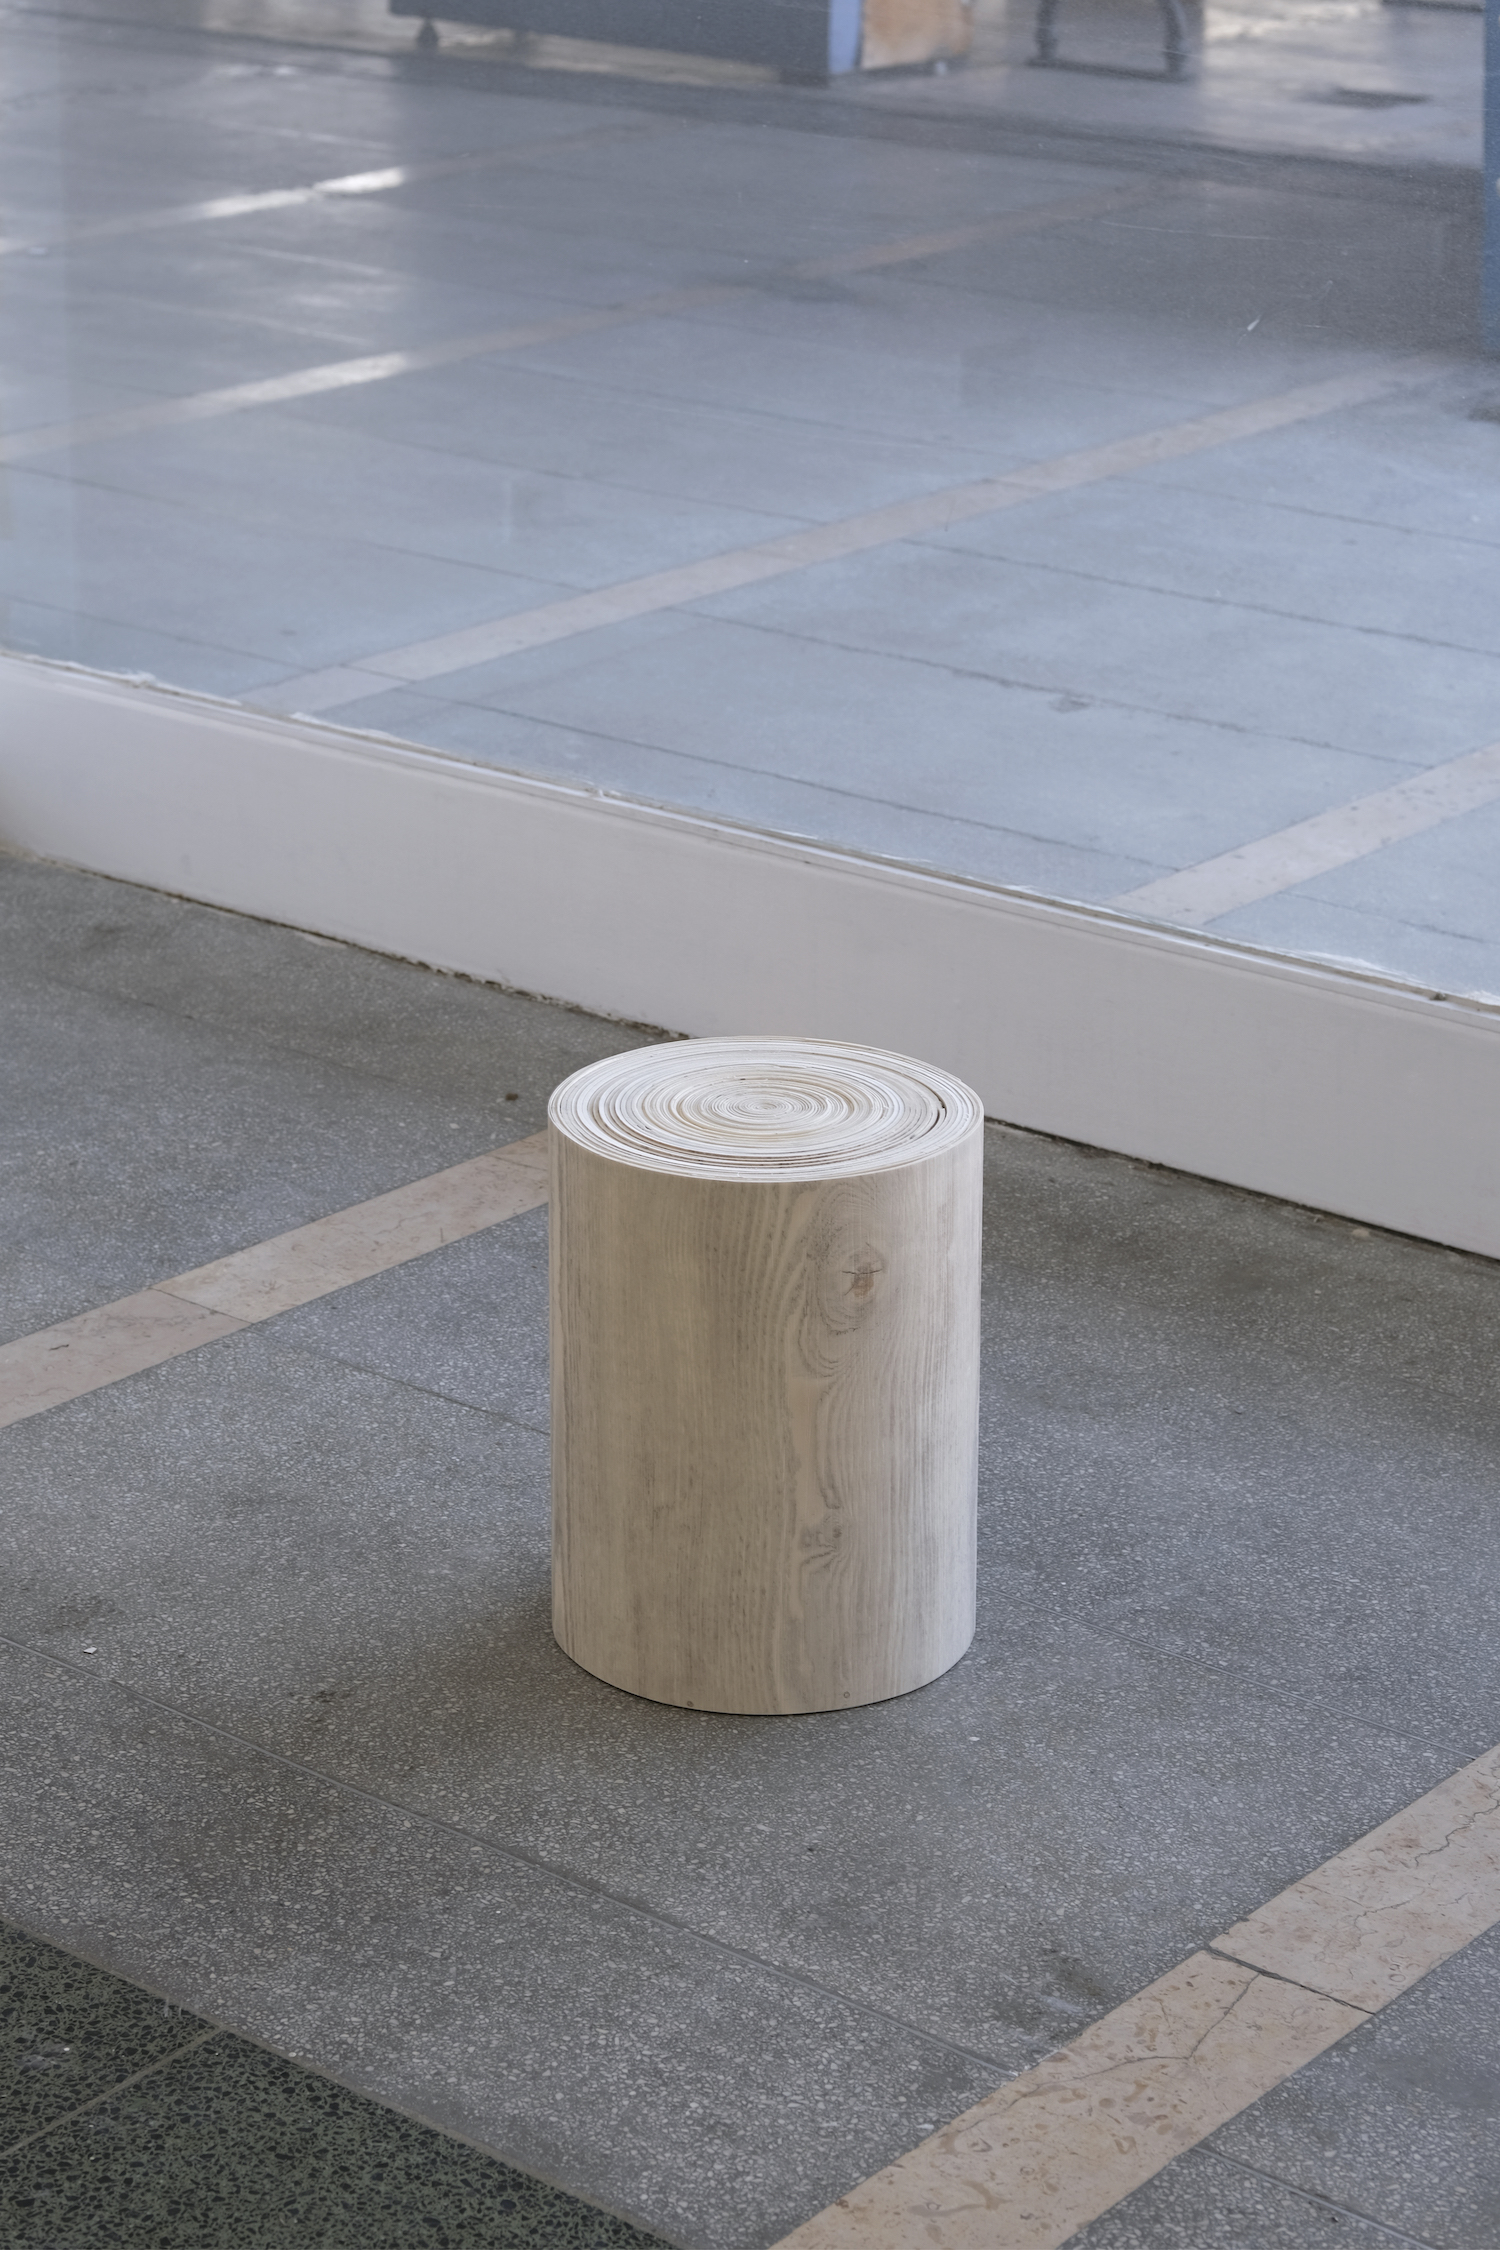 Log, 2021, Wood look polyvinyl chloride flooring, Alpkim Aldesin L 1220, 30 x 30 x 40 cm